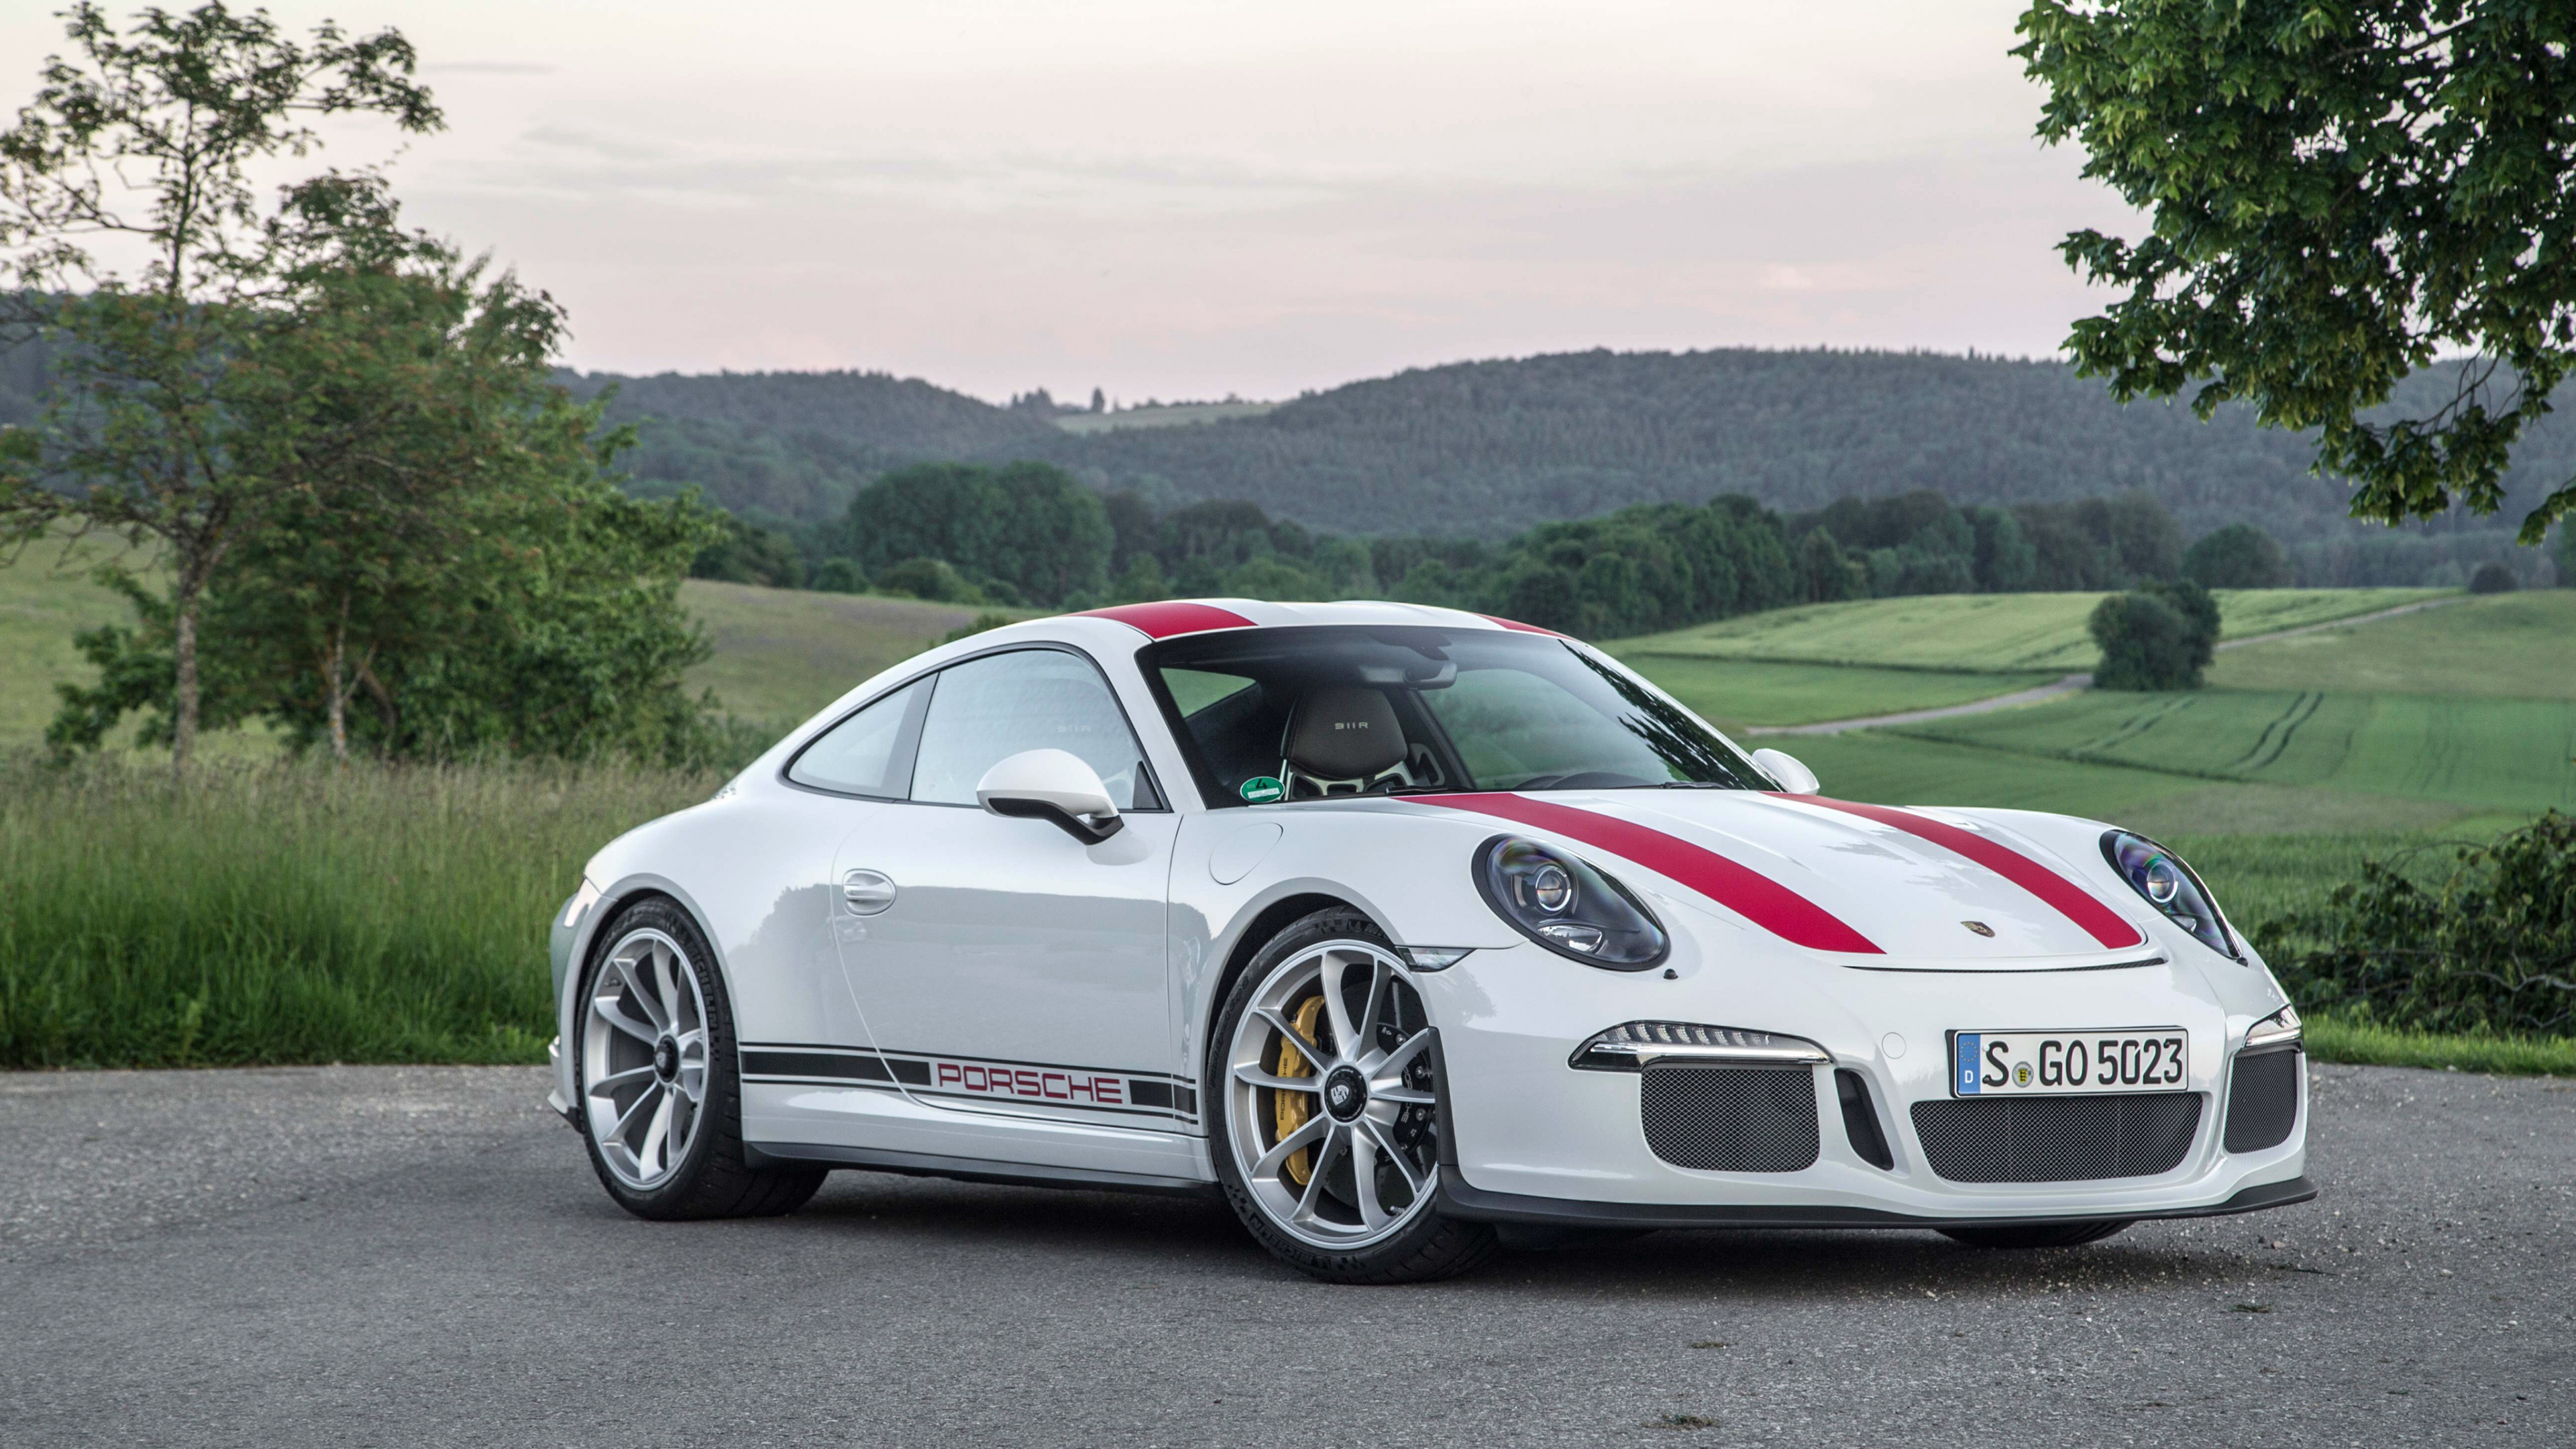 White Porsche 911 on Road During Daytime. Wallpaper in 3840x2160 Resolution